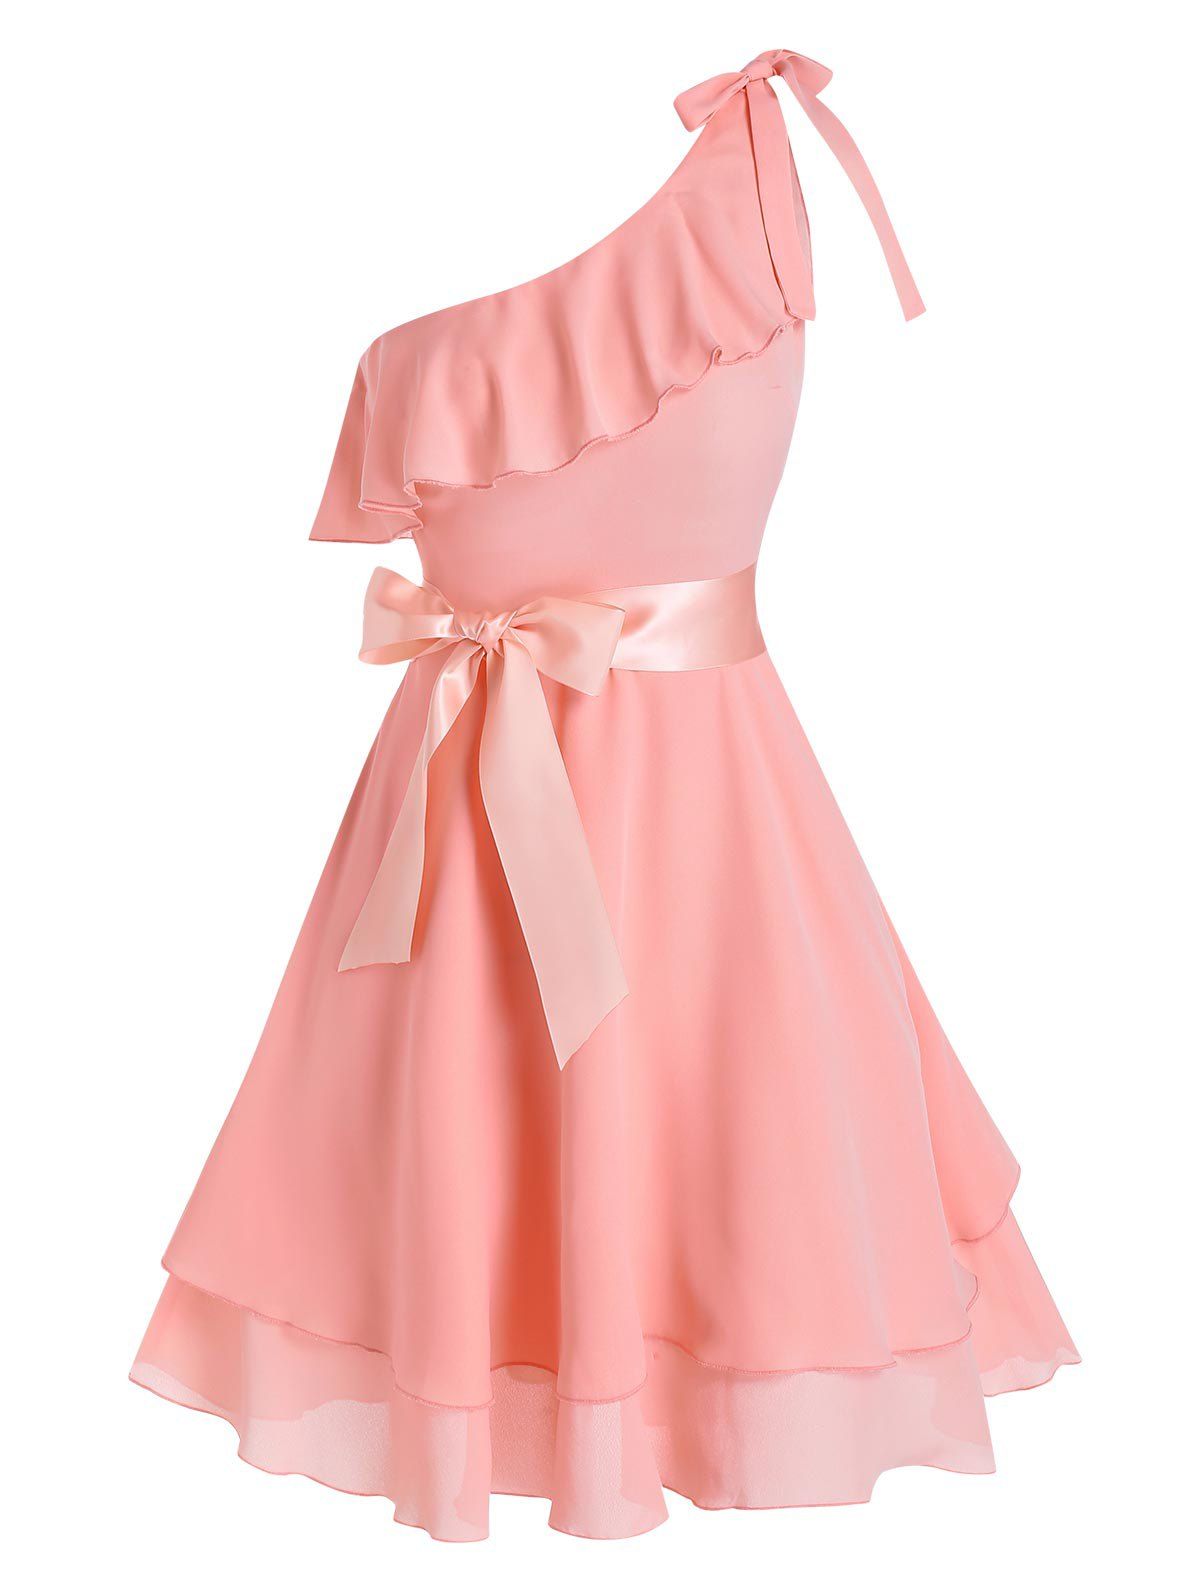 Chiffon A Line Mini Party Dress Ribbon Bowknot One Shoulder Ruffle Solid Color Layered Dress - LIGHT PINK XL